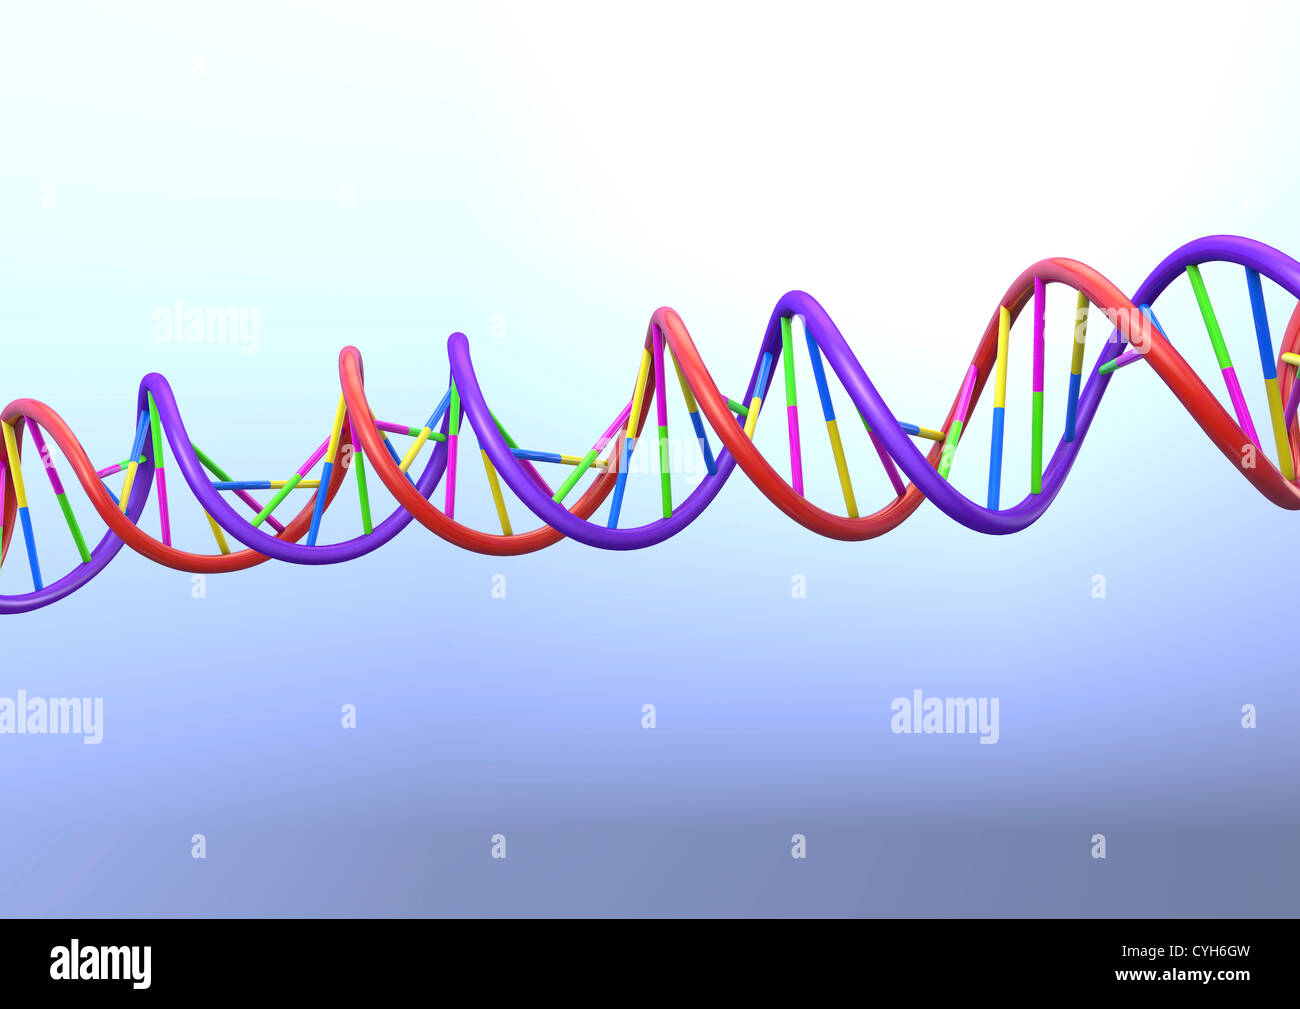 Modelo de doble hélice del ADN - 3D Render - concepto imagen Fotografía de  stock - Alamy